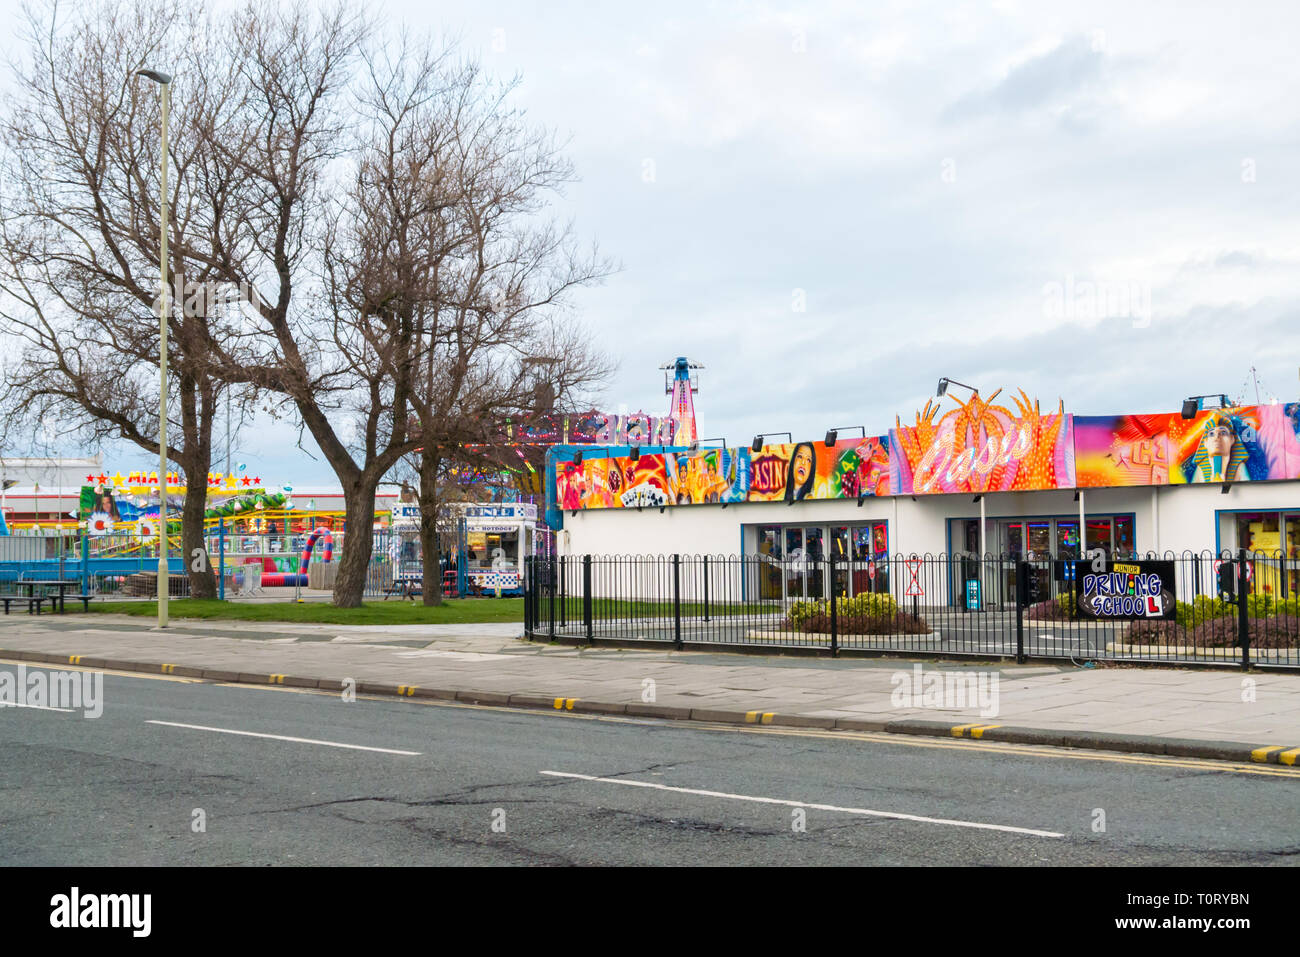 An Amusement Arcade and Ocean Pleasure Beach Park at South Shields Stock Photo